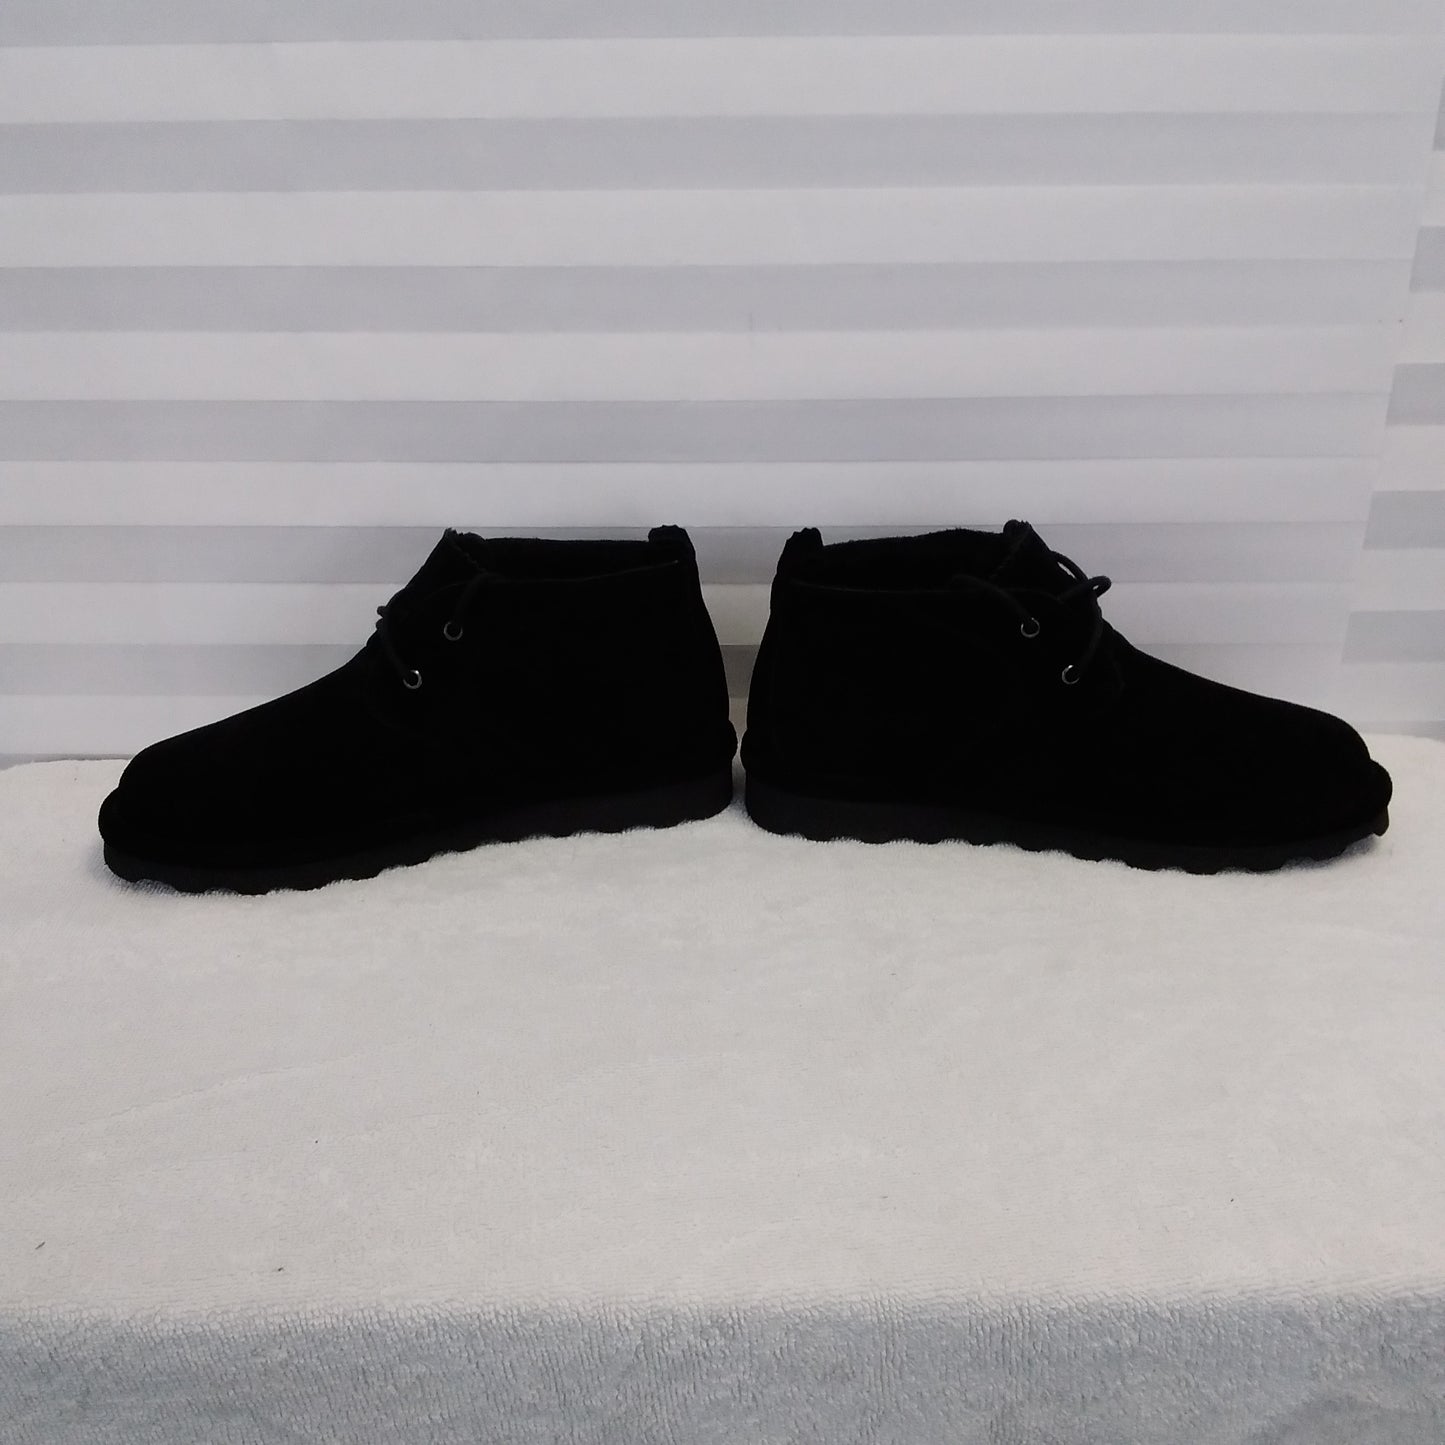 NIB - BEARPAW Women's Black Skye Chukka Boots - Size 10